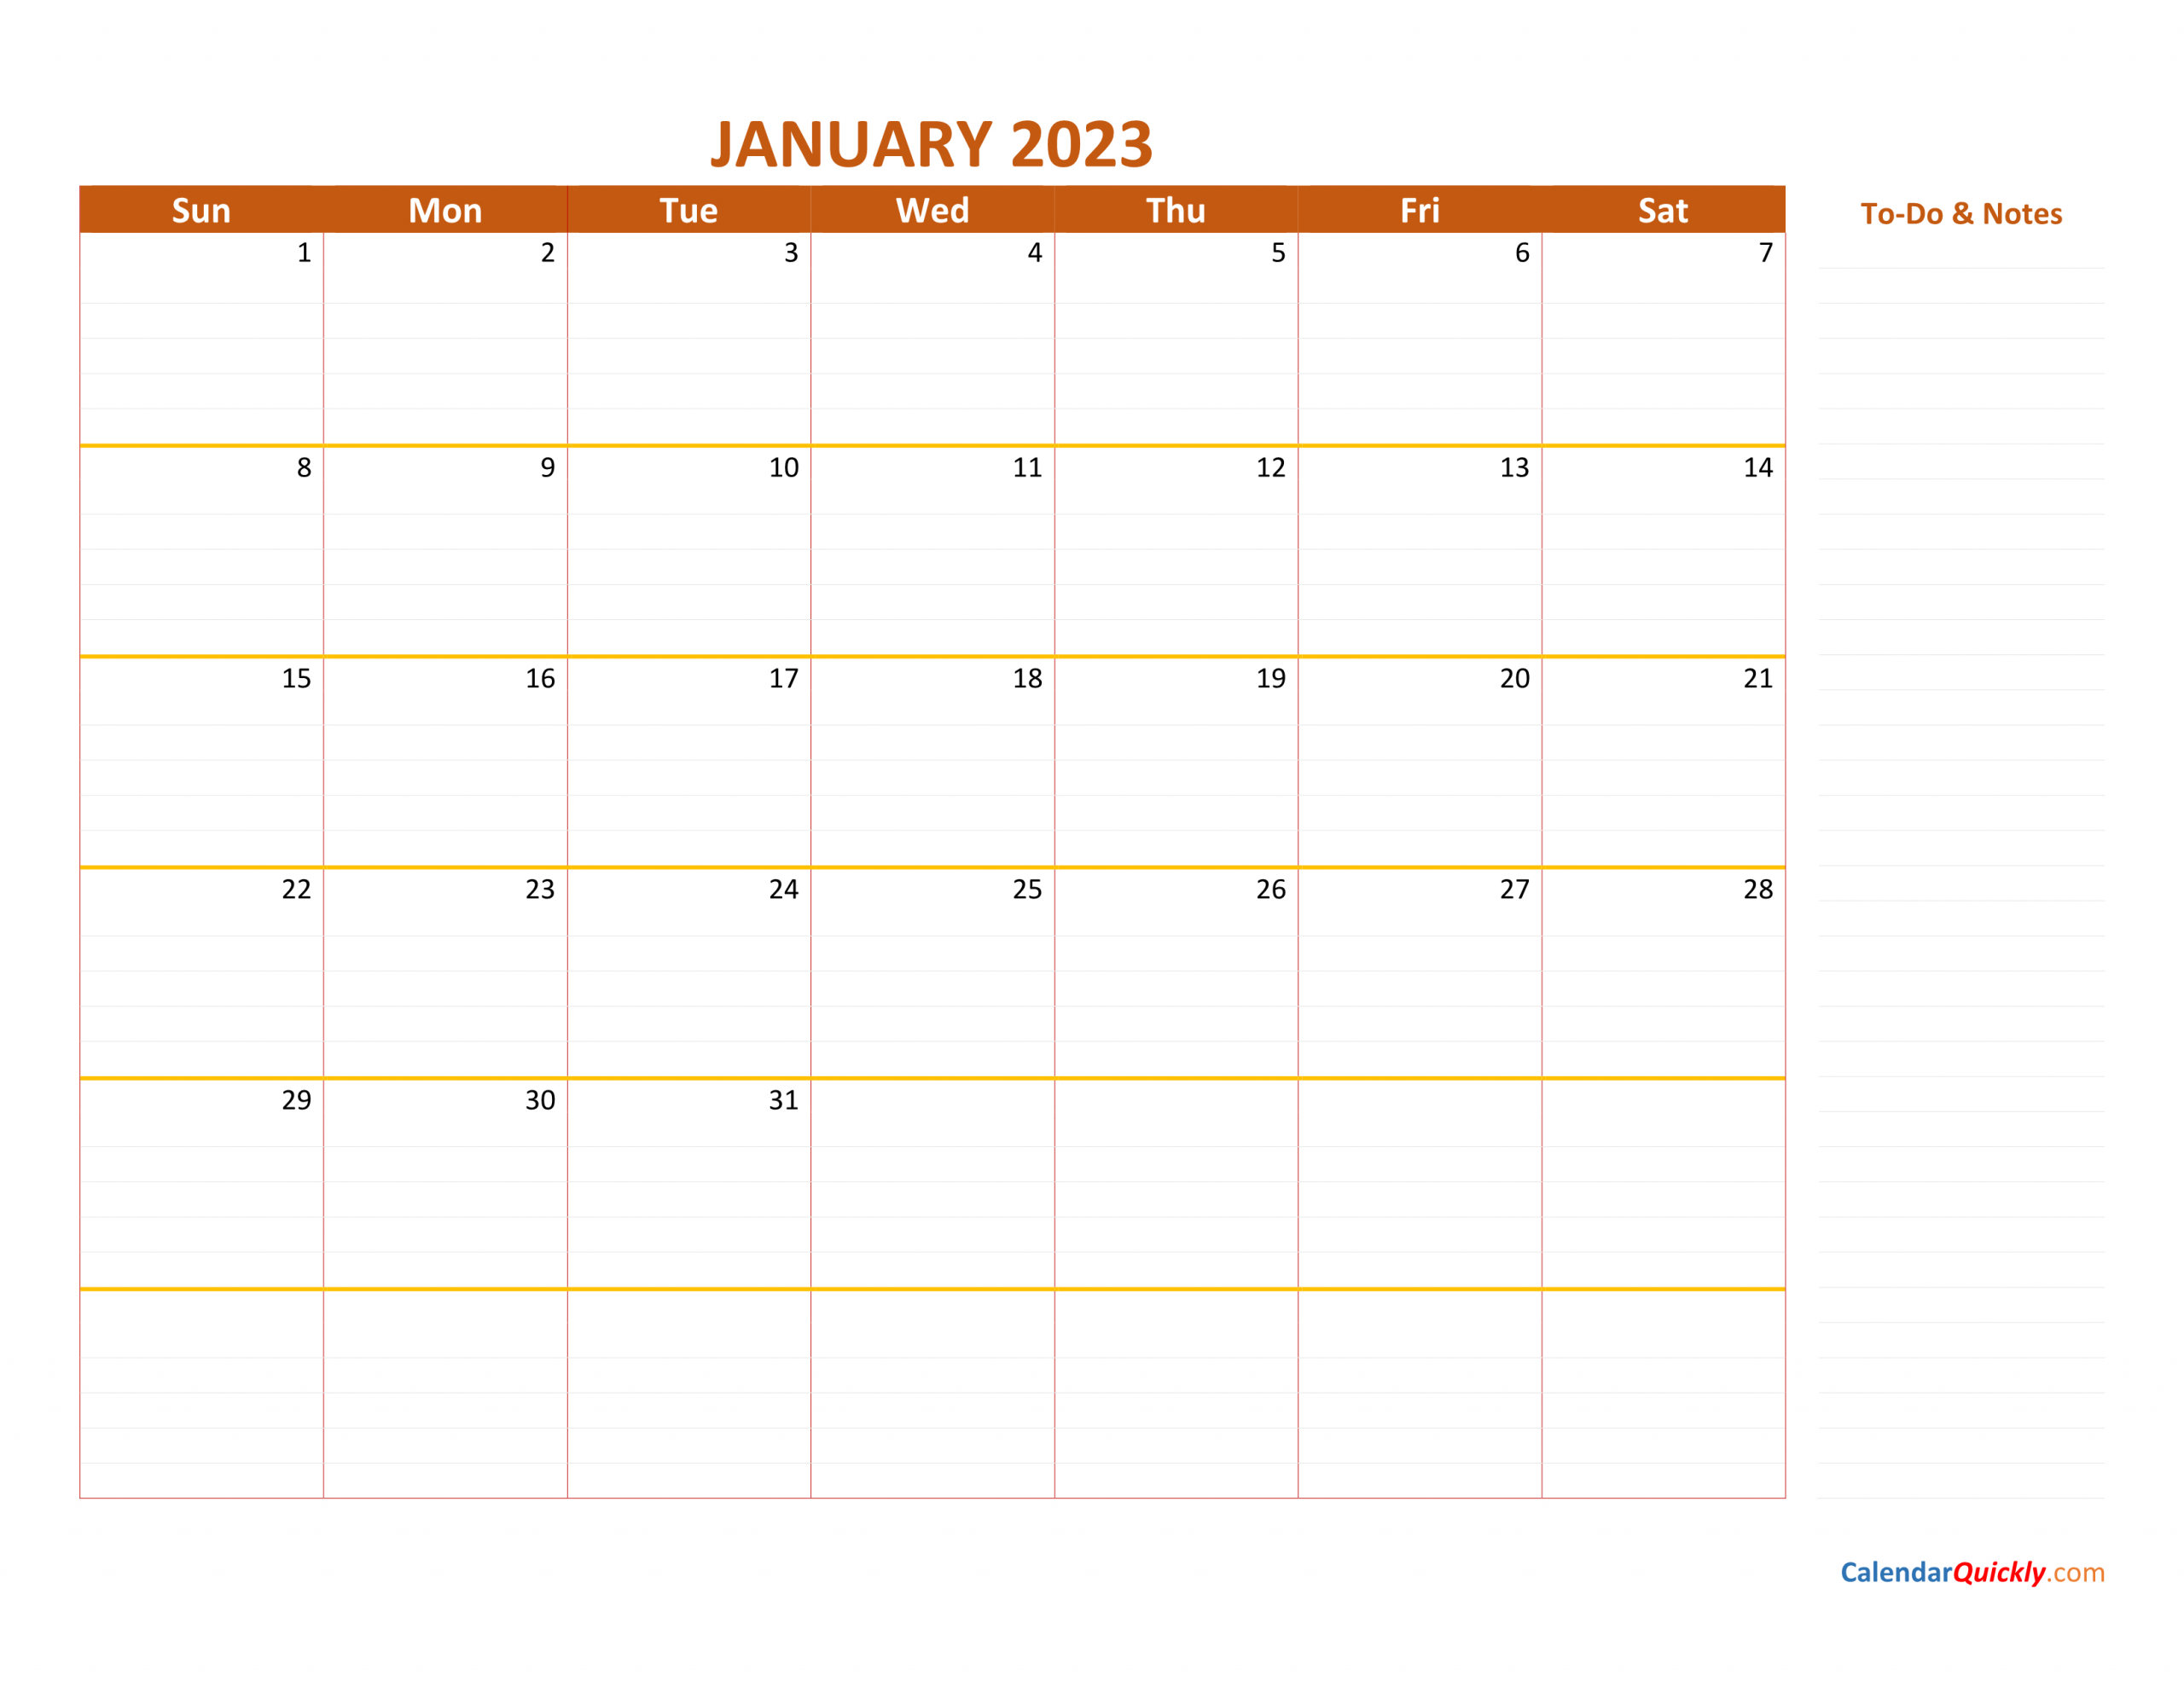 monthly 2023 calendar calendar quickly